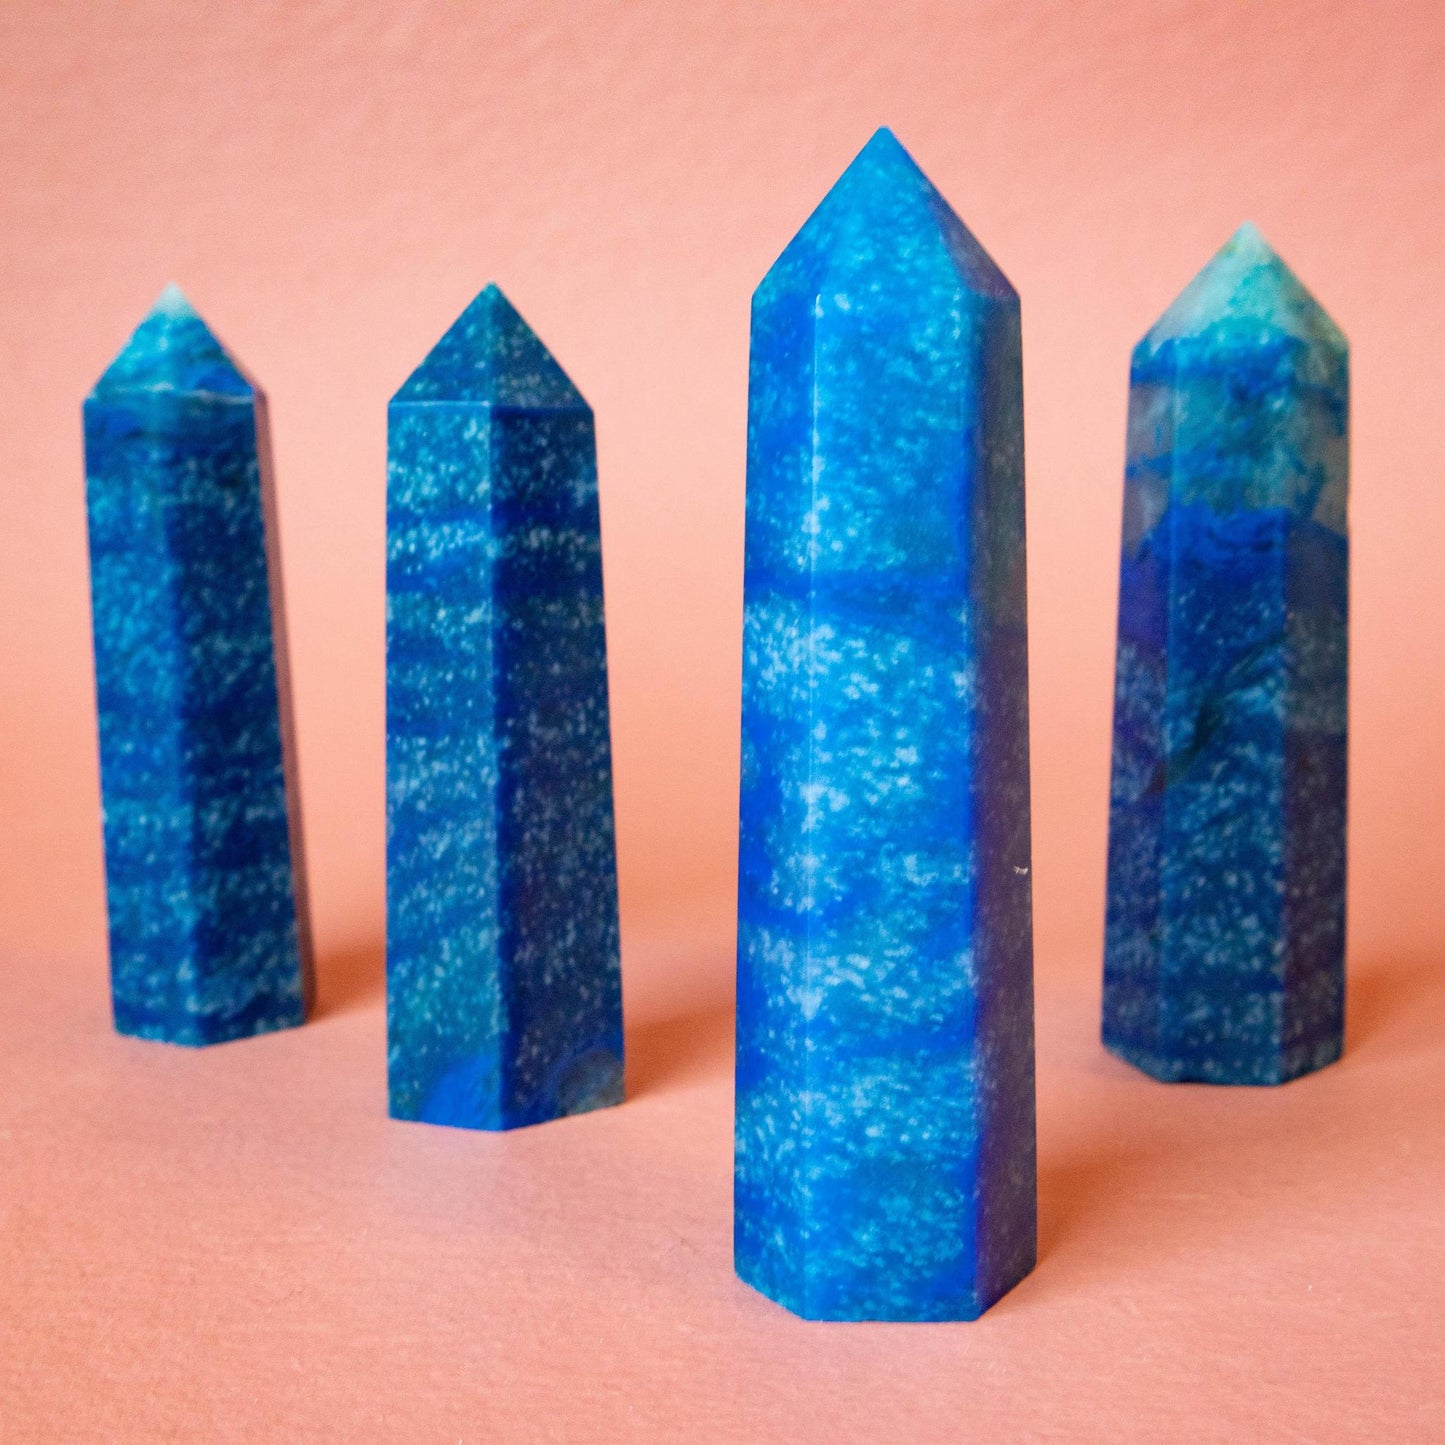 blue aventurine, blue aventurine obelisk, crystal obelisk, blue aventurine crystal, blue aventurine stone, blue aventurine properties, blue aventurine healing properties, blue aventurine meaning